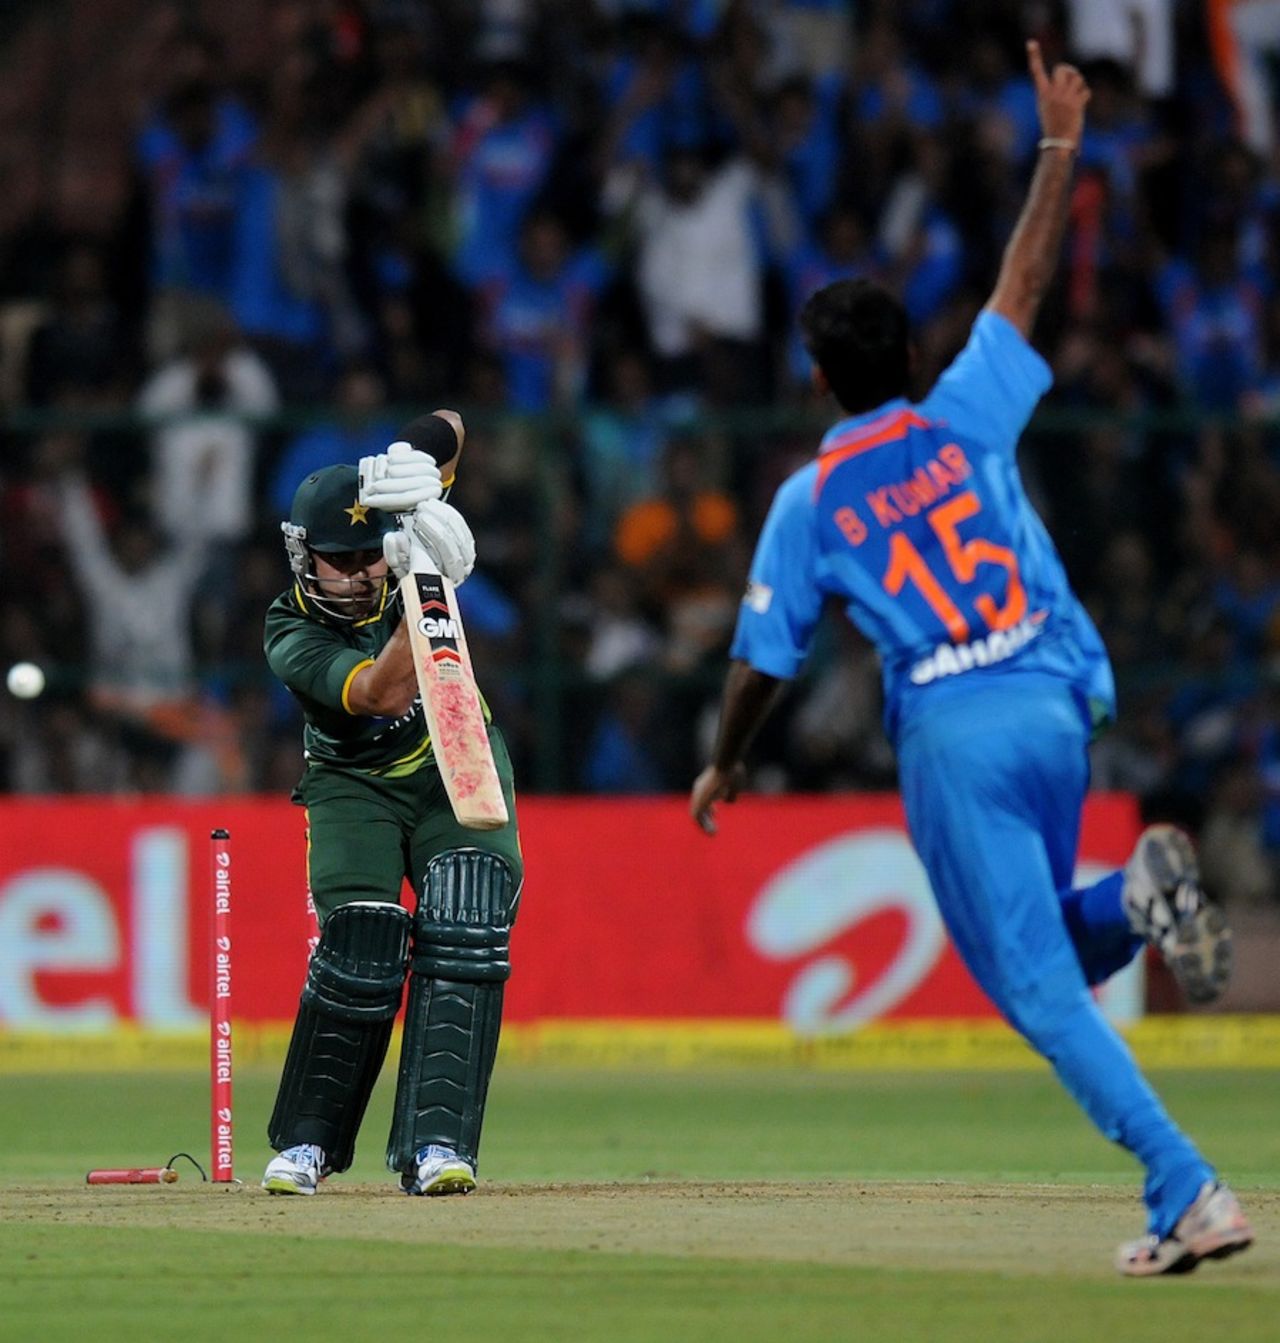 Bhuvneshwar Kumar knocks back Umar Akmal's middle stump, India v Pakistan, 1st T20, Bangalore, December 25, 2012